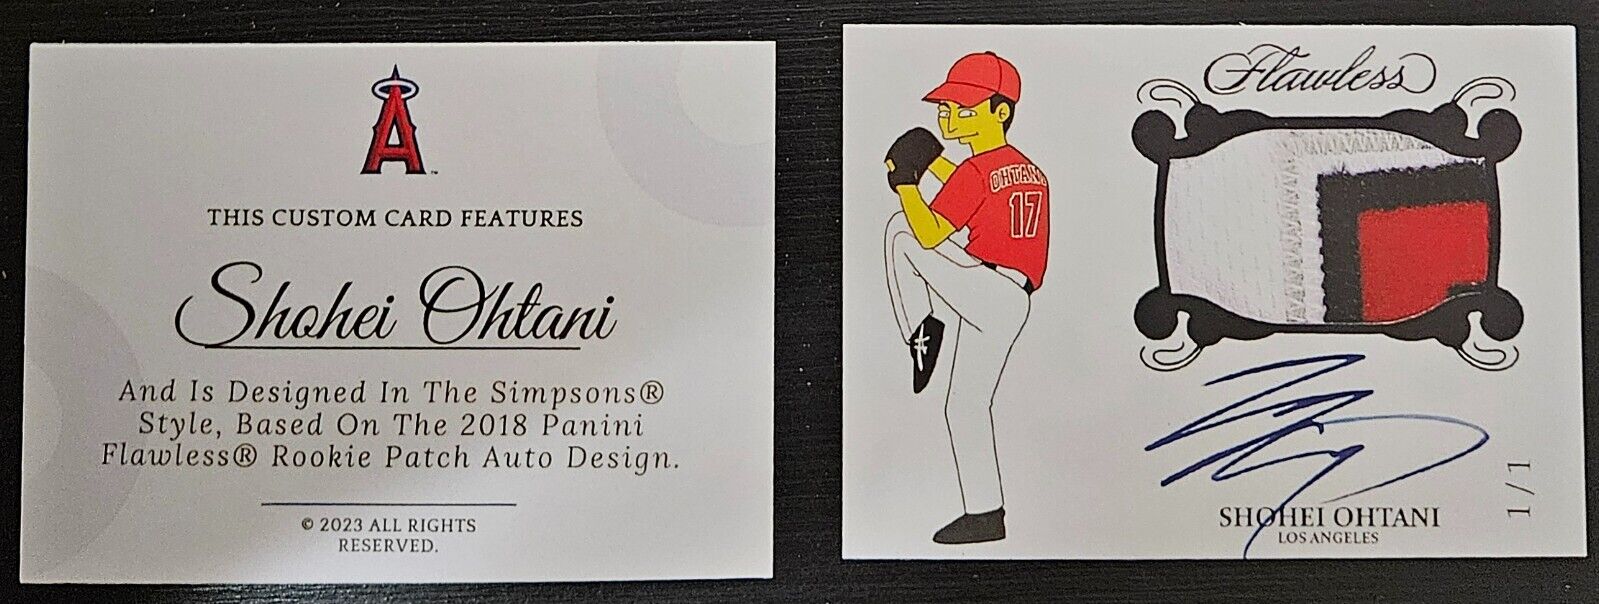 SHOHEI OHTANI Custom Art Simpsons Style Card